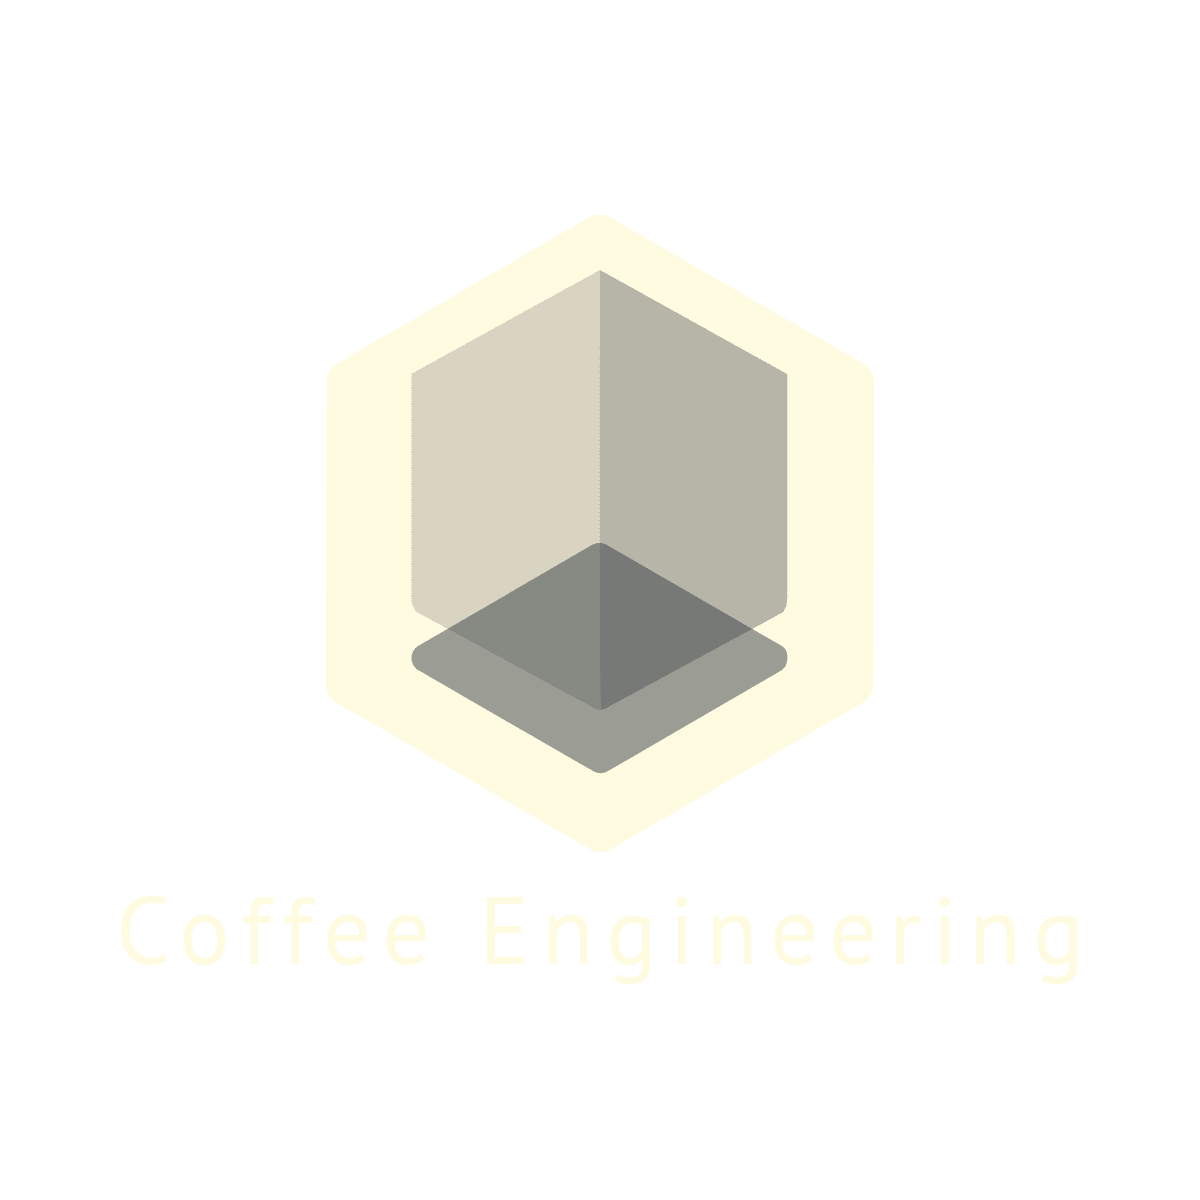 Coffee Engineering